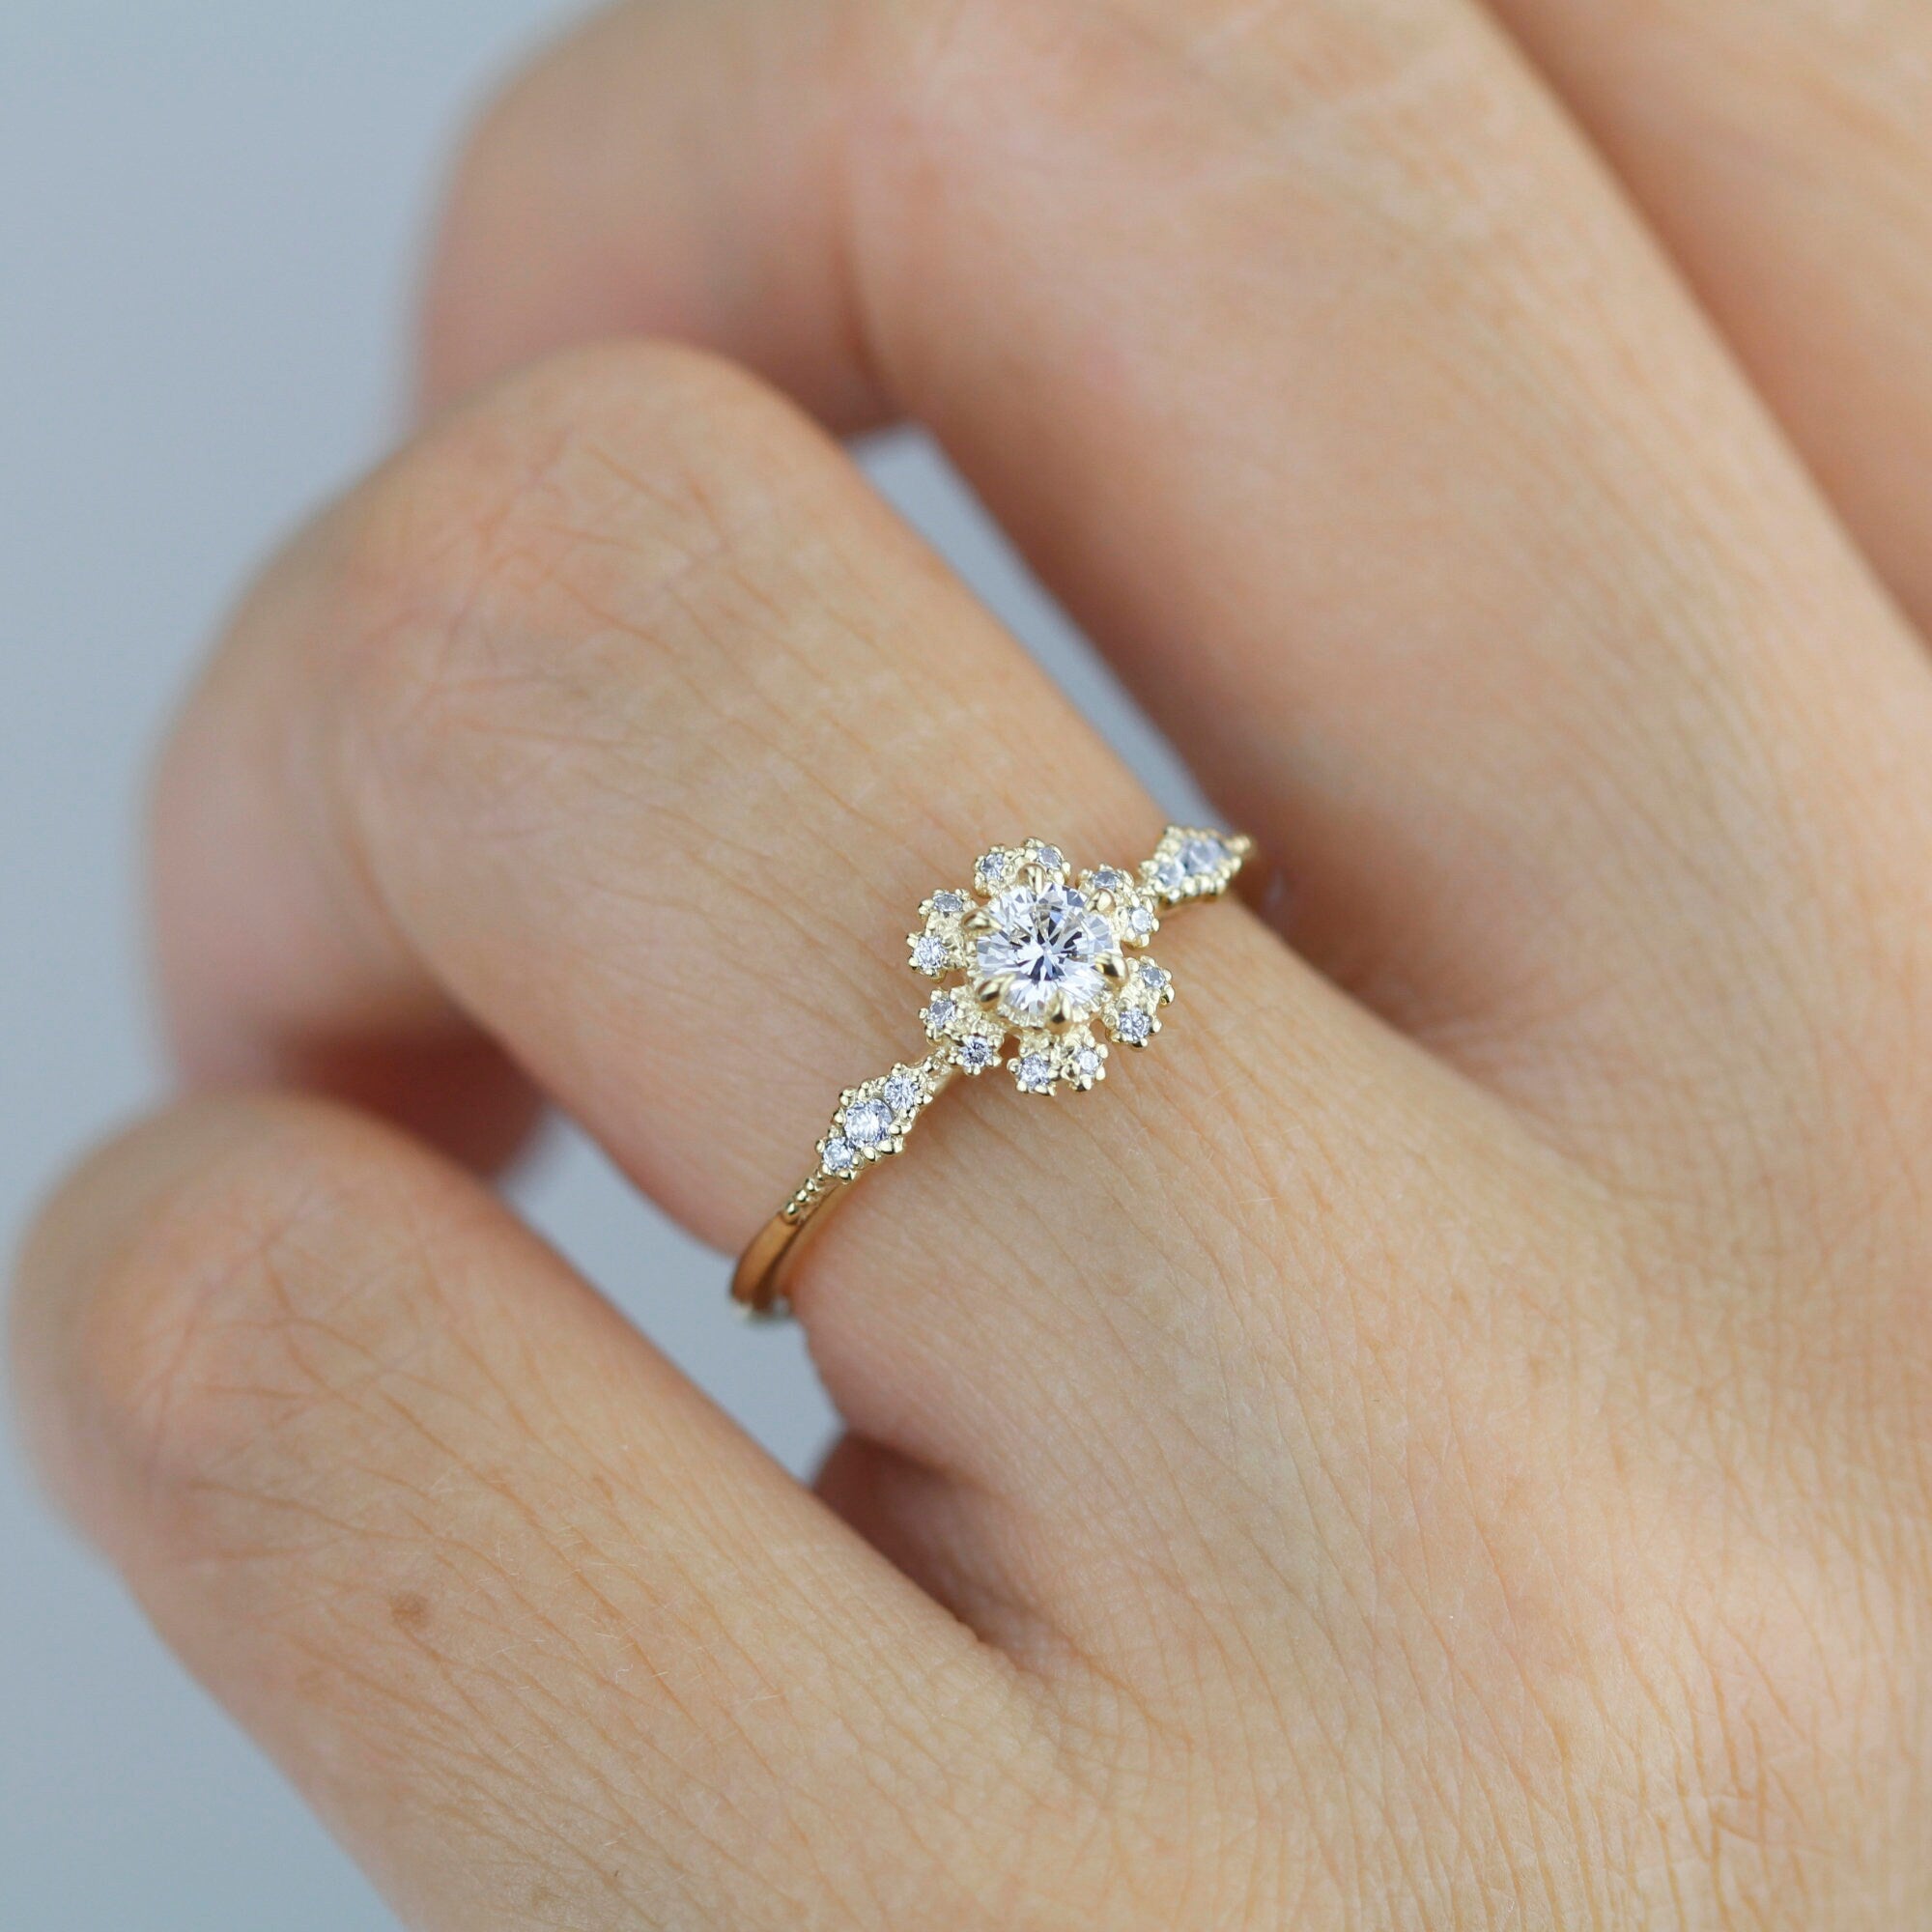 Buy Unique Engagement Ring Set 14k Rose Gold Engagement Rings Celtic Floral  Online in India - Etsy